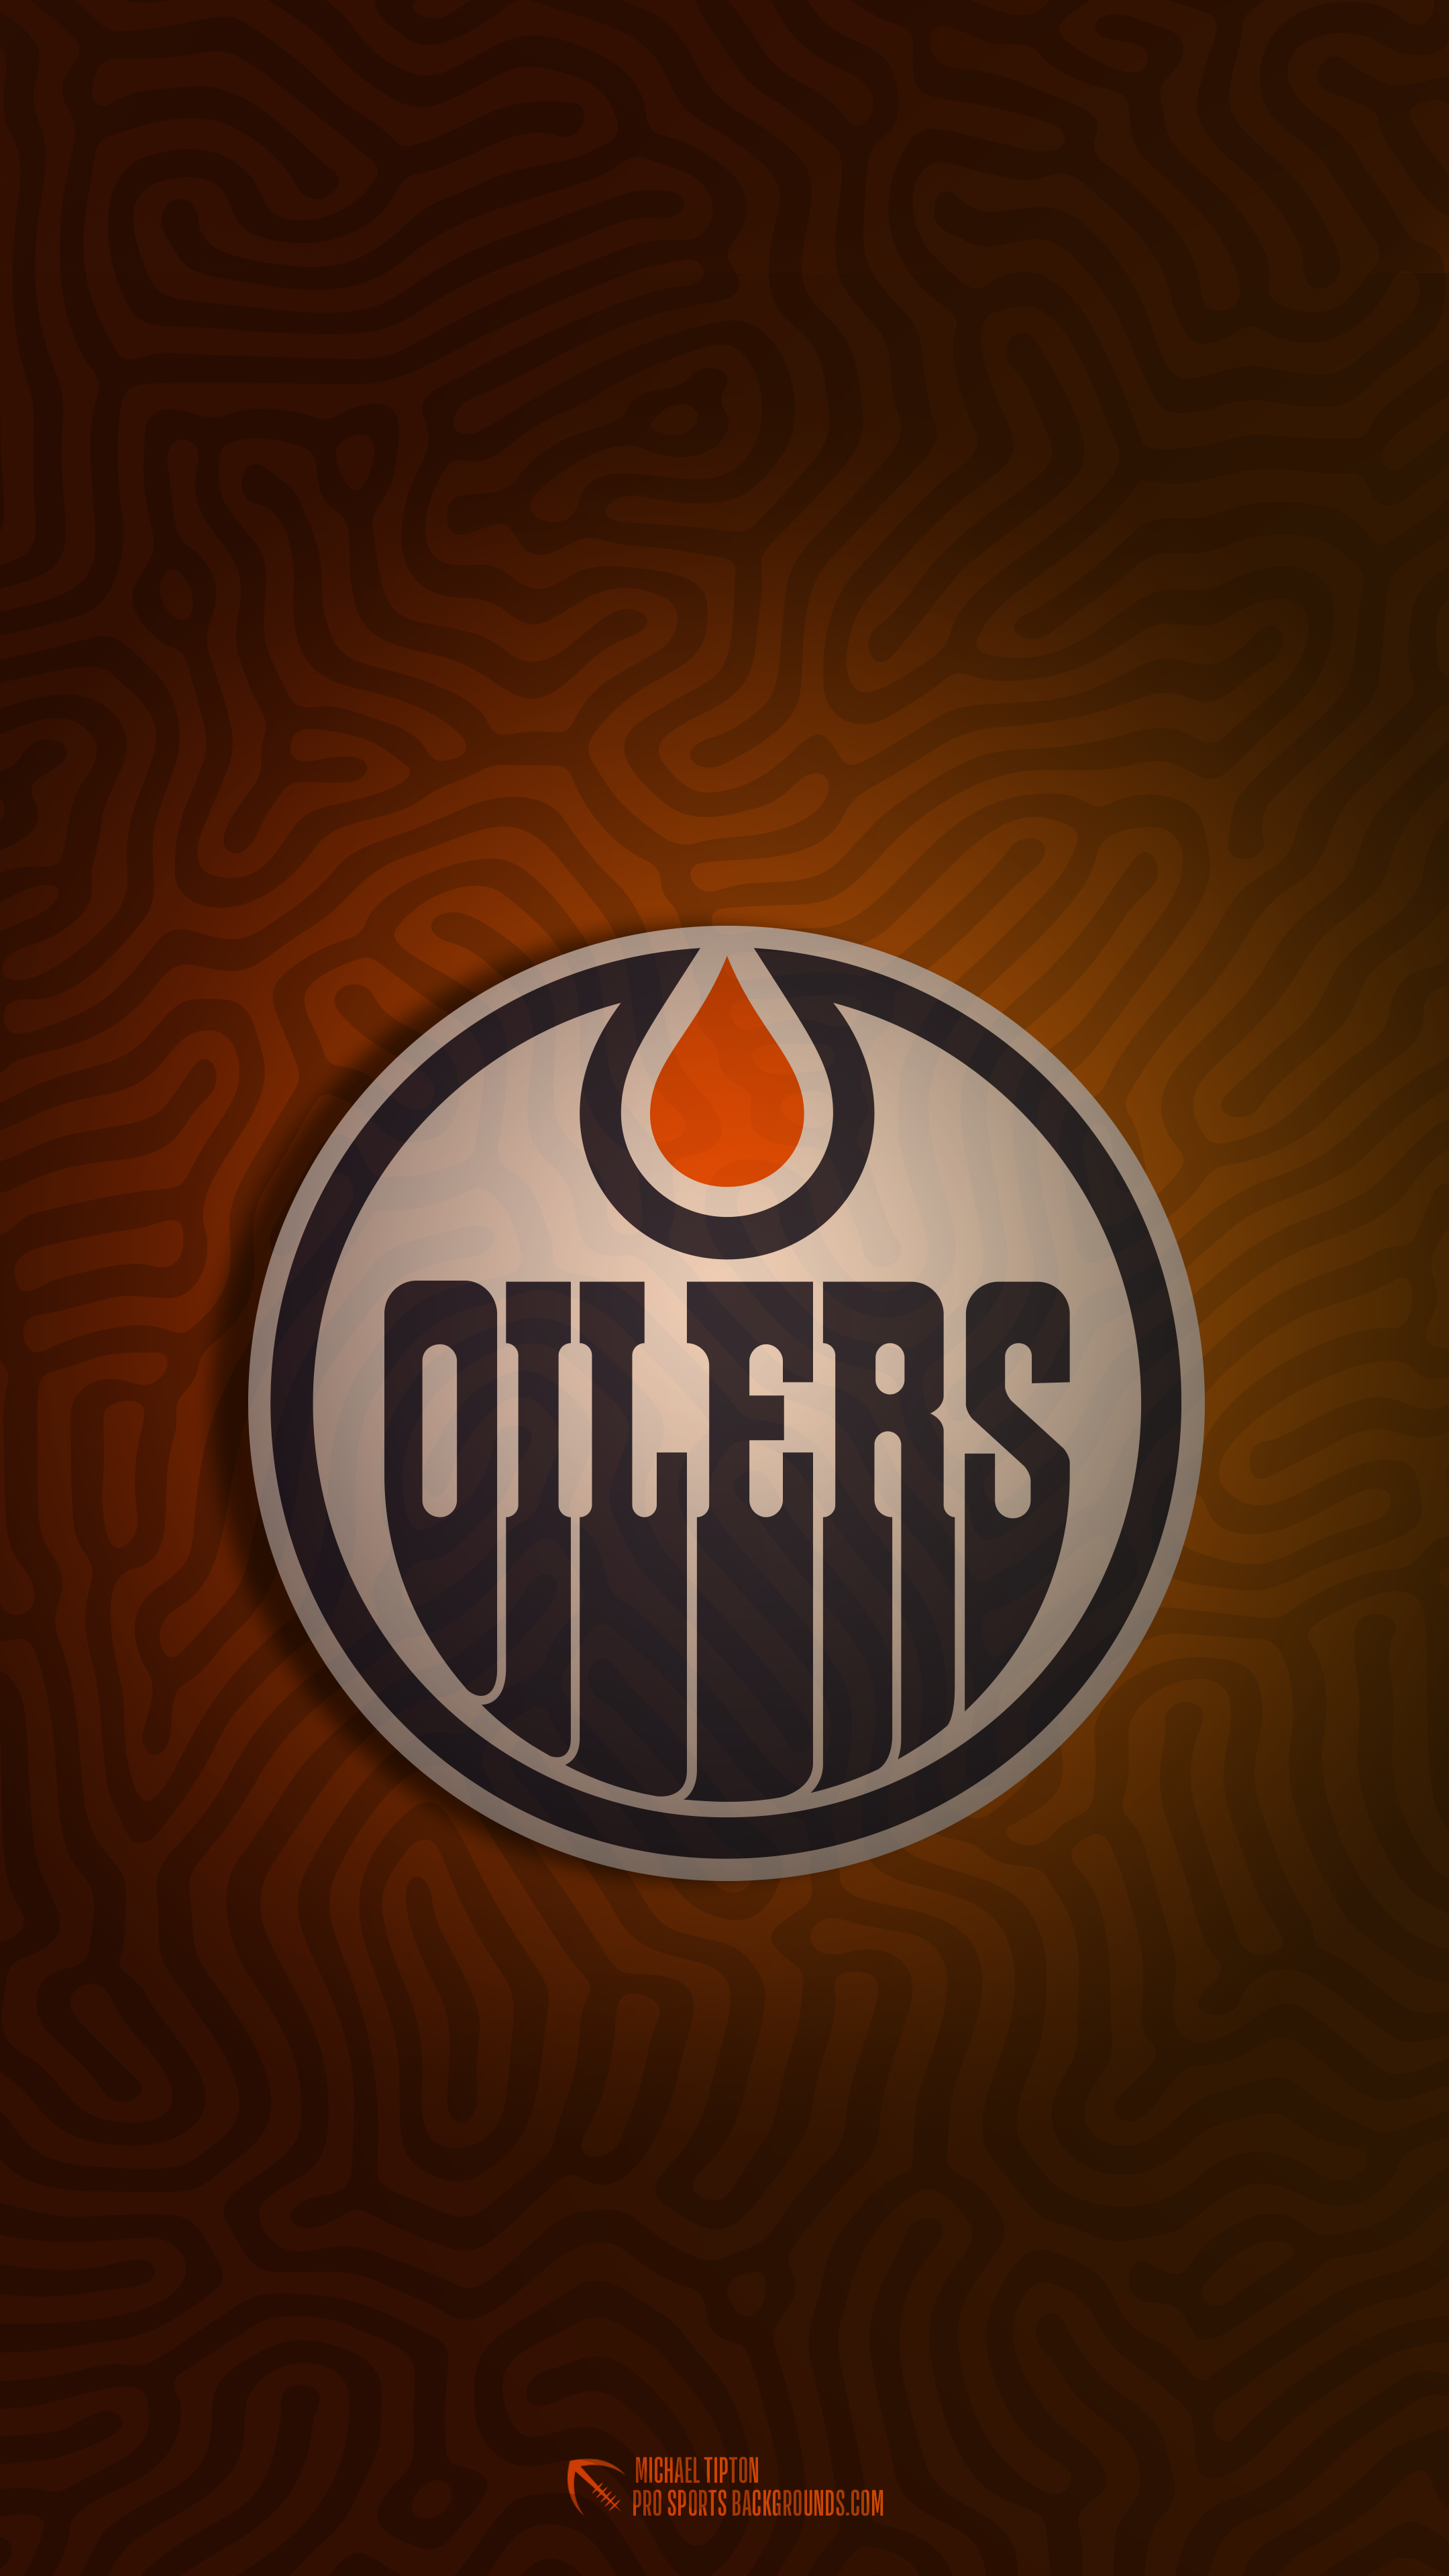 2023 Edmonton Oilers wallpaper – Pro Sports Backgrounds